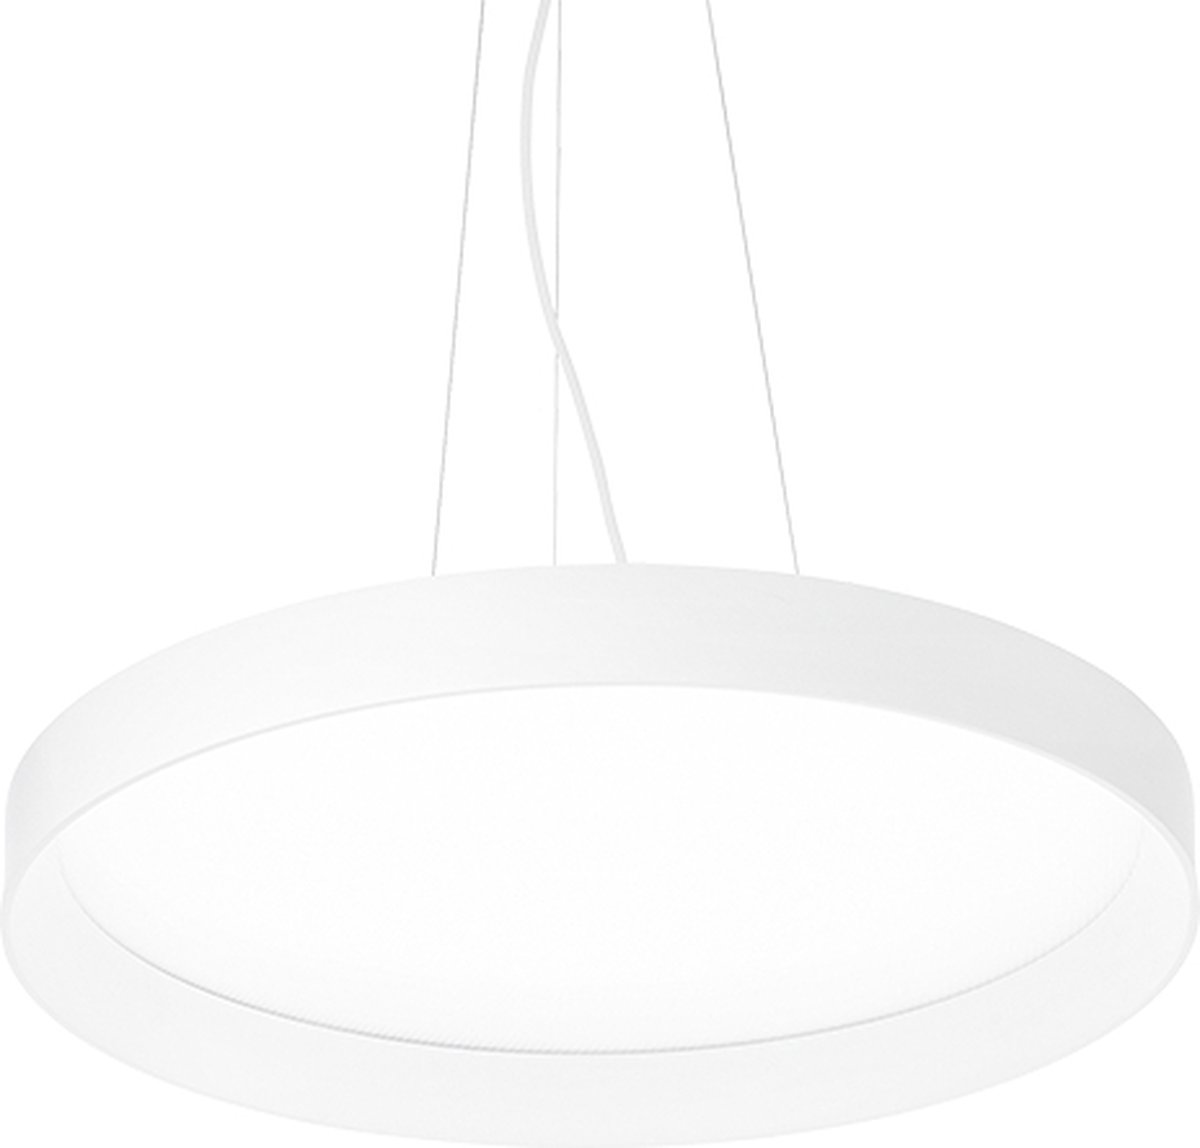 Ideal Lux - Fly - Hanglamp - Aluminium - LED - Wit - Voor binnen - Lampen - Woonkamer - Eetkamer - Keuken